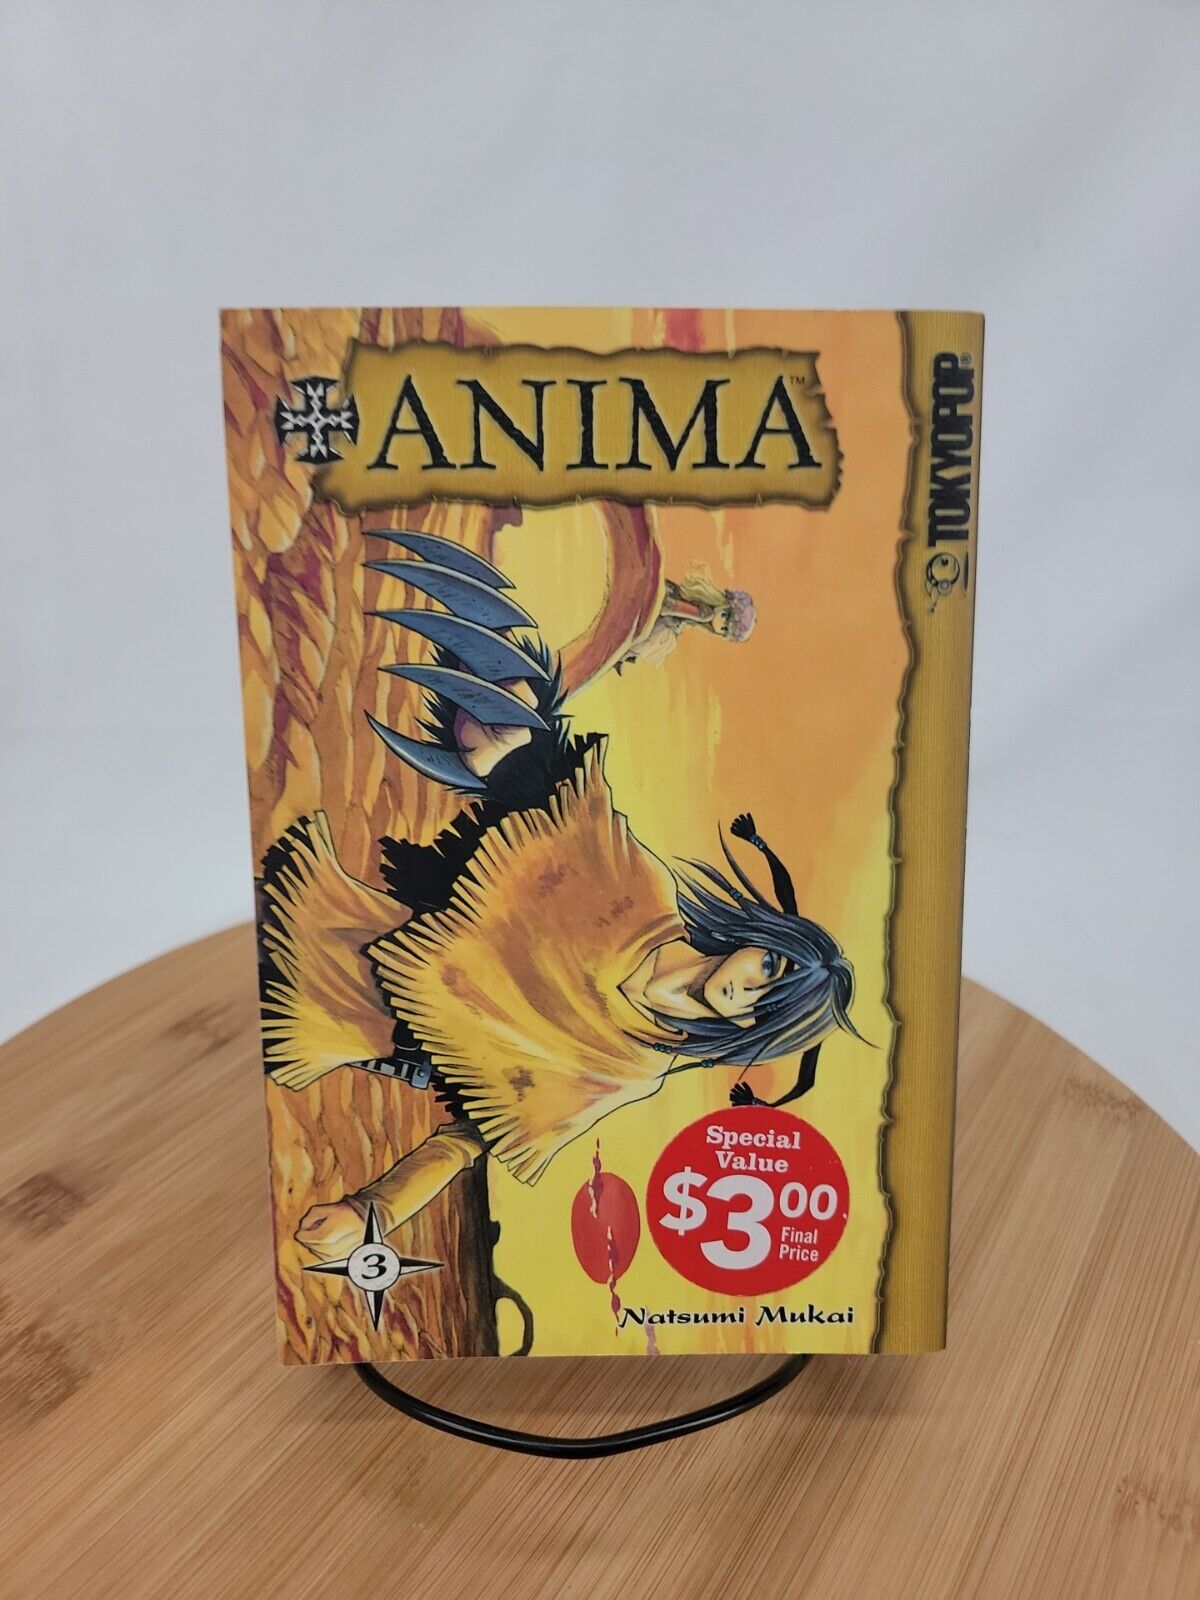 +Anima, Vol.3 by Natsumi Mukai (Tokyopop, English Manga) Graphic Novel Anime